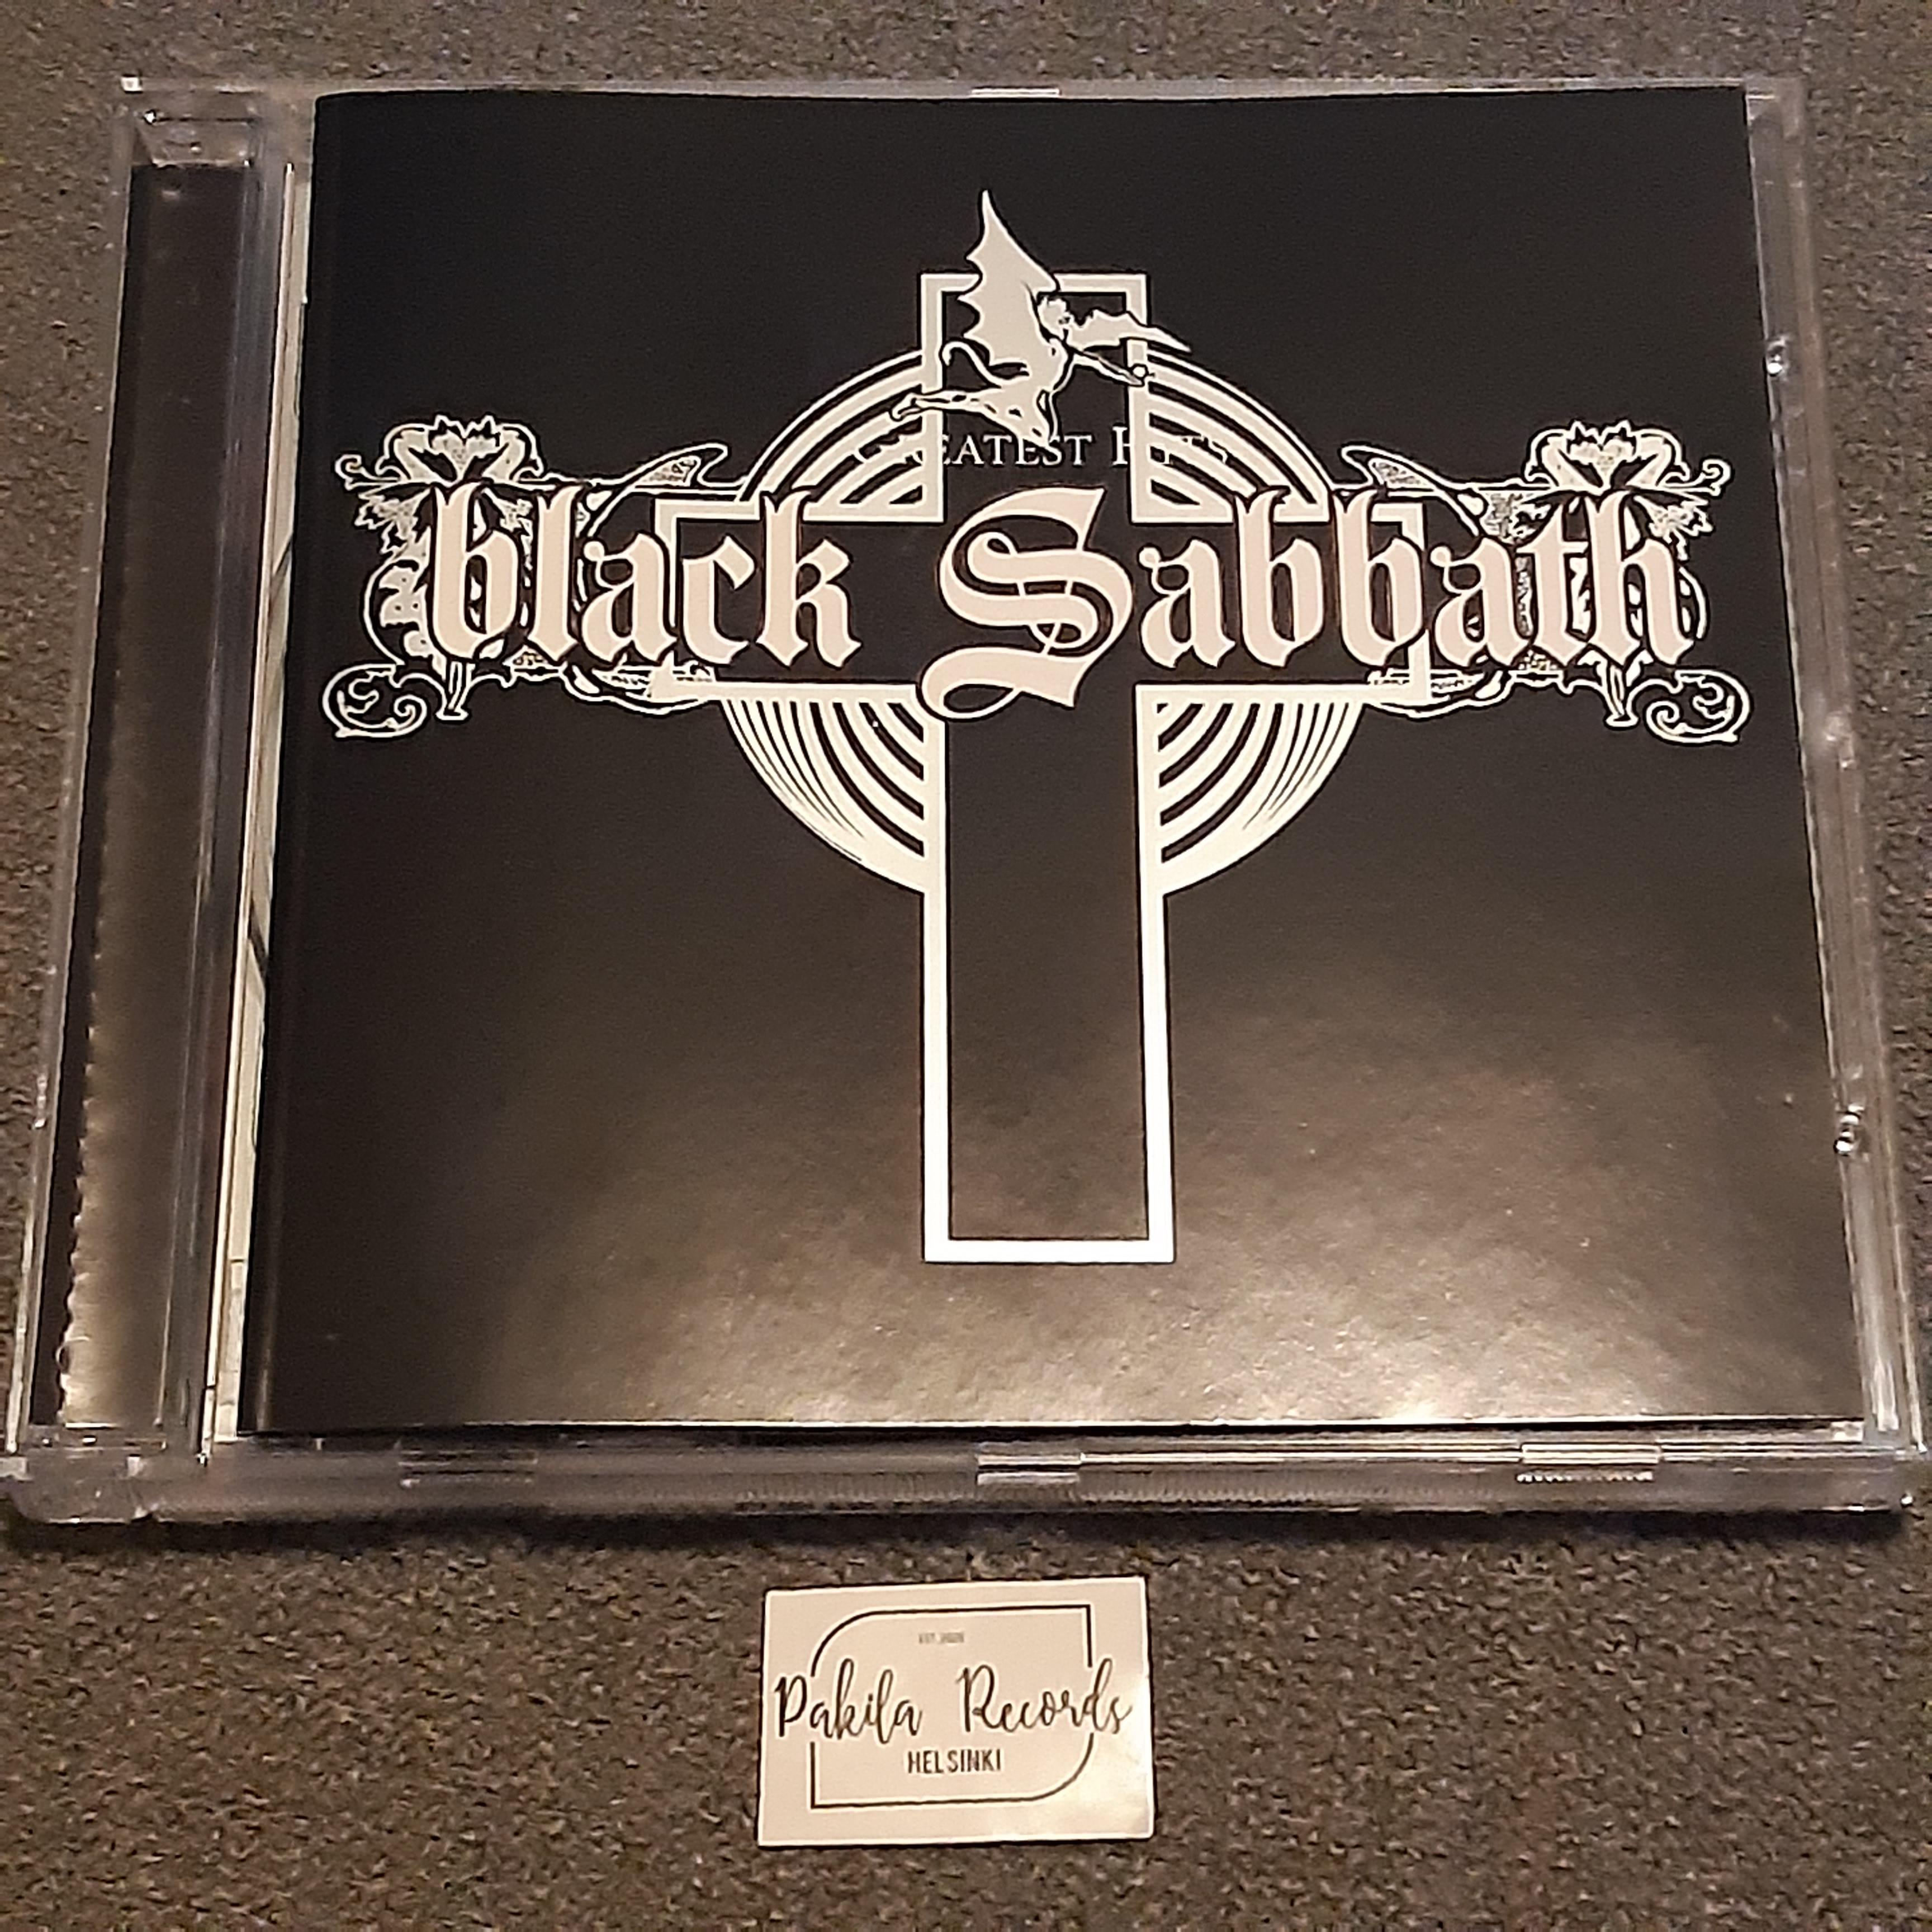 Black Sabbath - Greatest Hits - CD (käytetty)